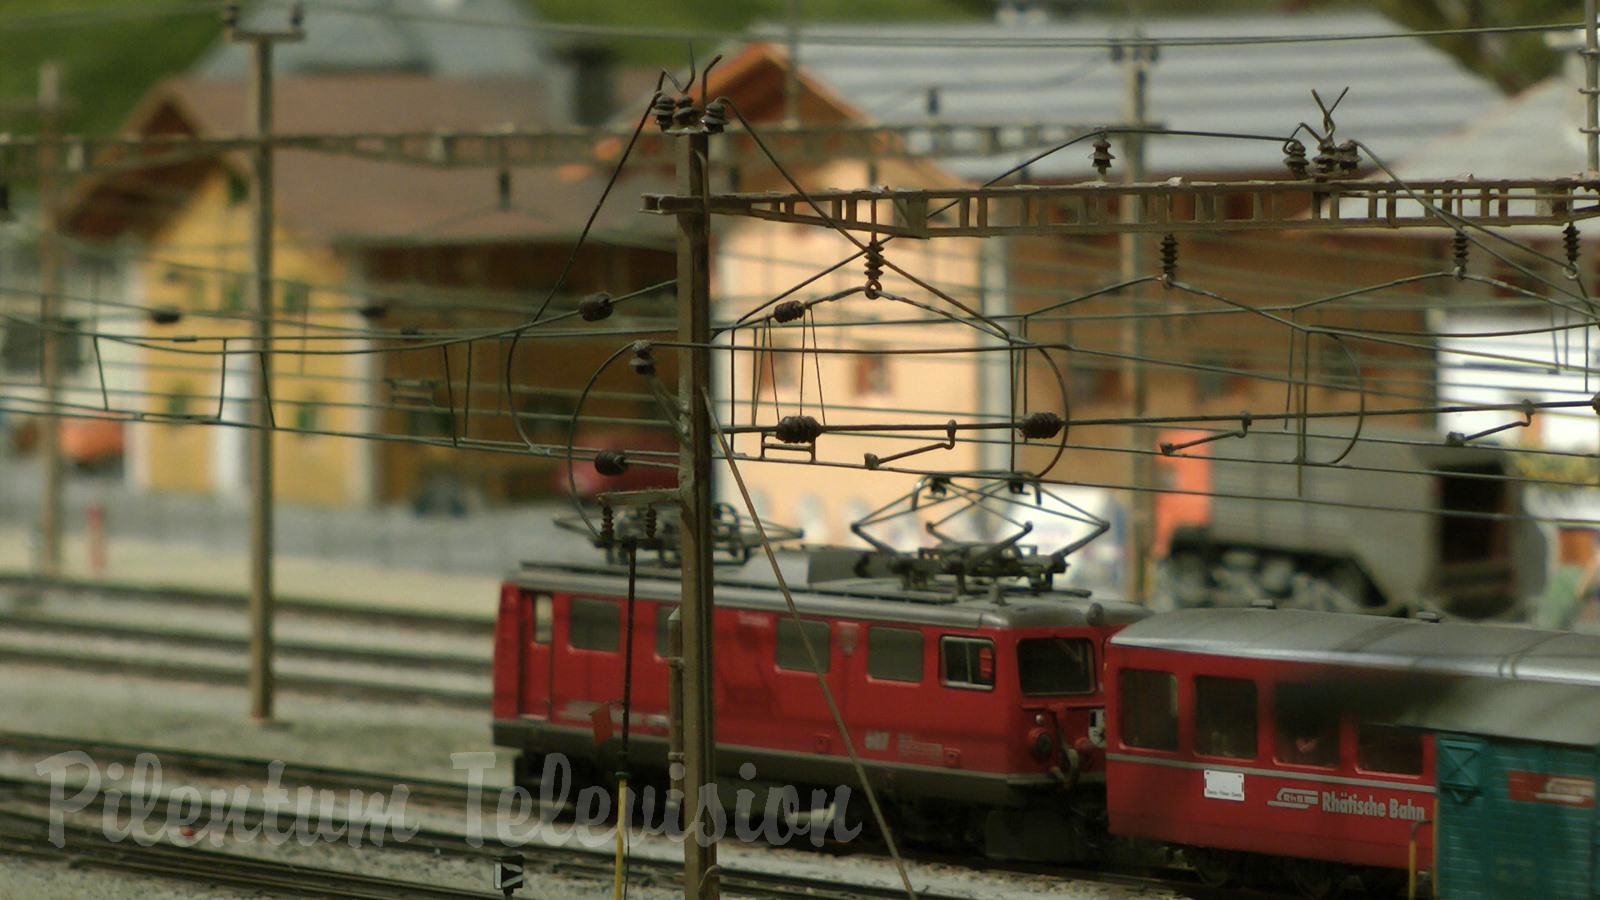 Narrow Gauge Model Railway Layout and Electric Locomotives in Switzerland